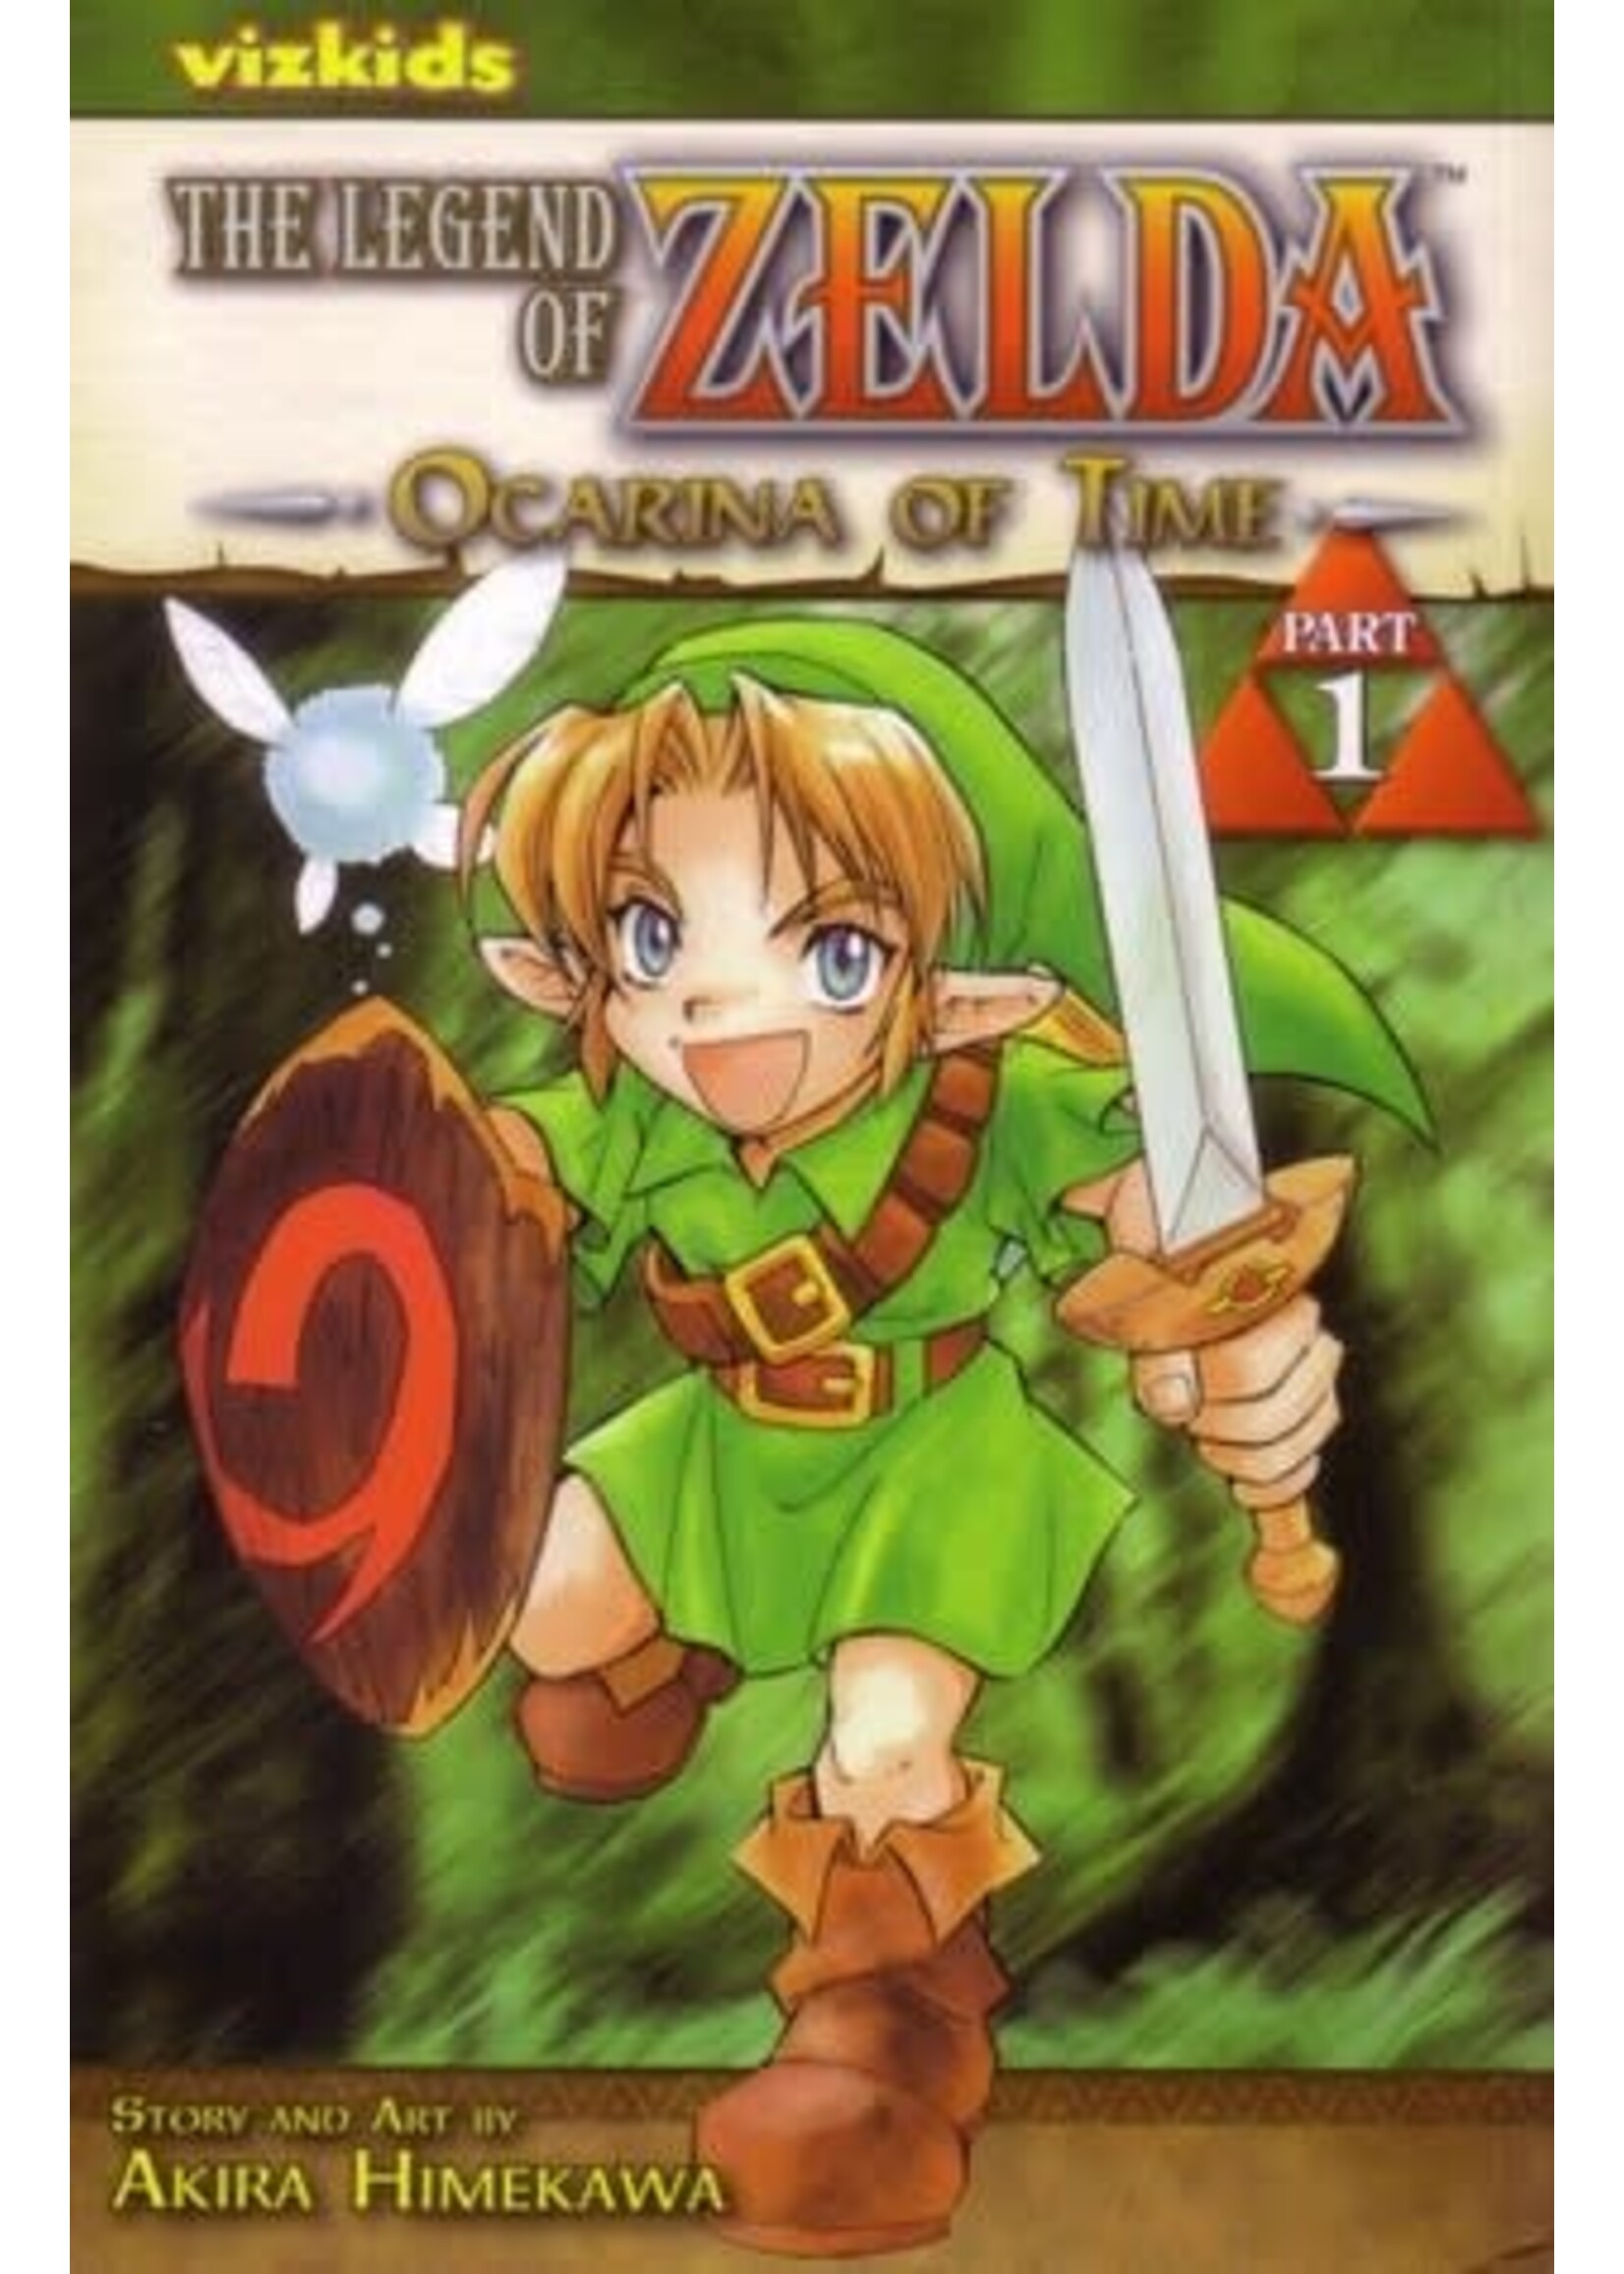 The Legend of Zelda: Ocarina of Time - Part 1 (The Legend of Zelda #1) by Akira Himekawa